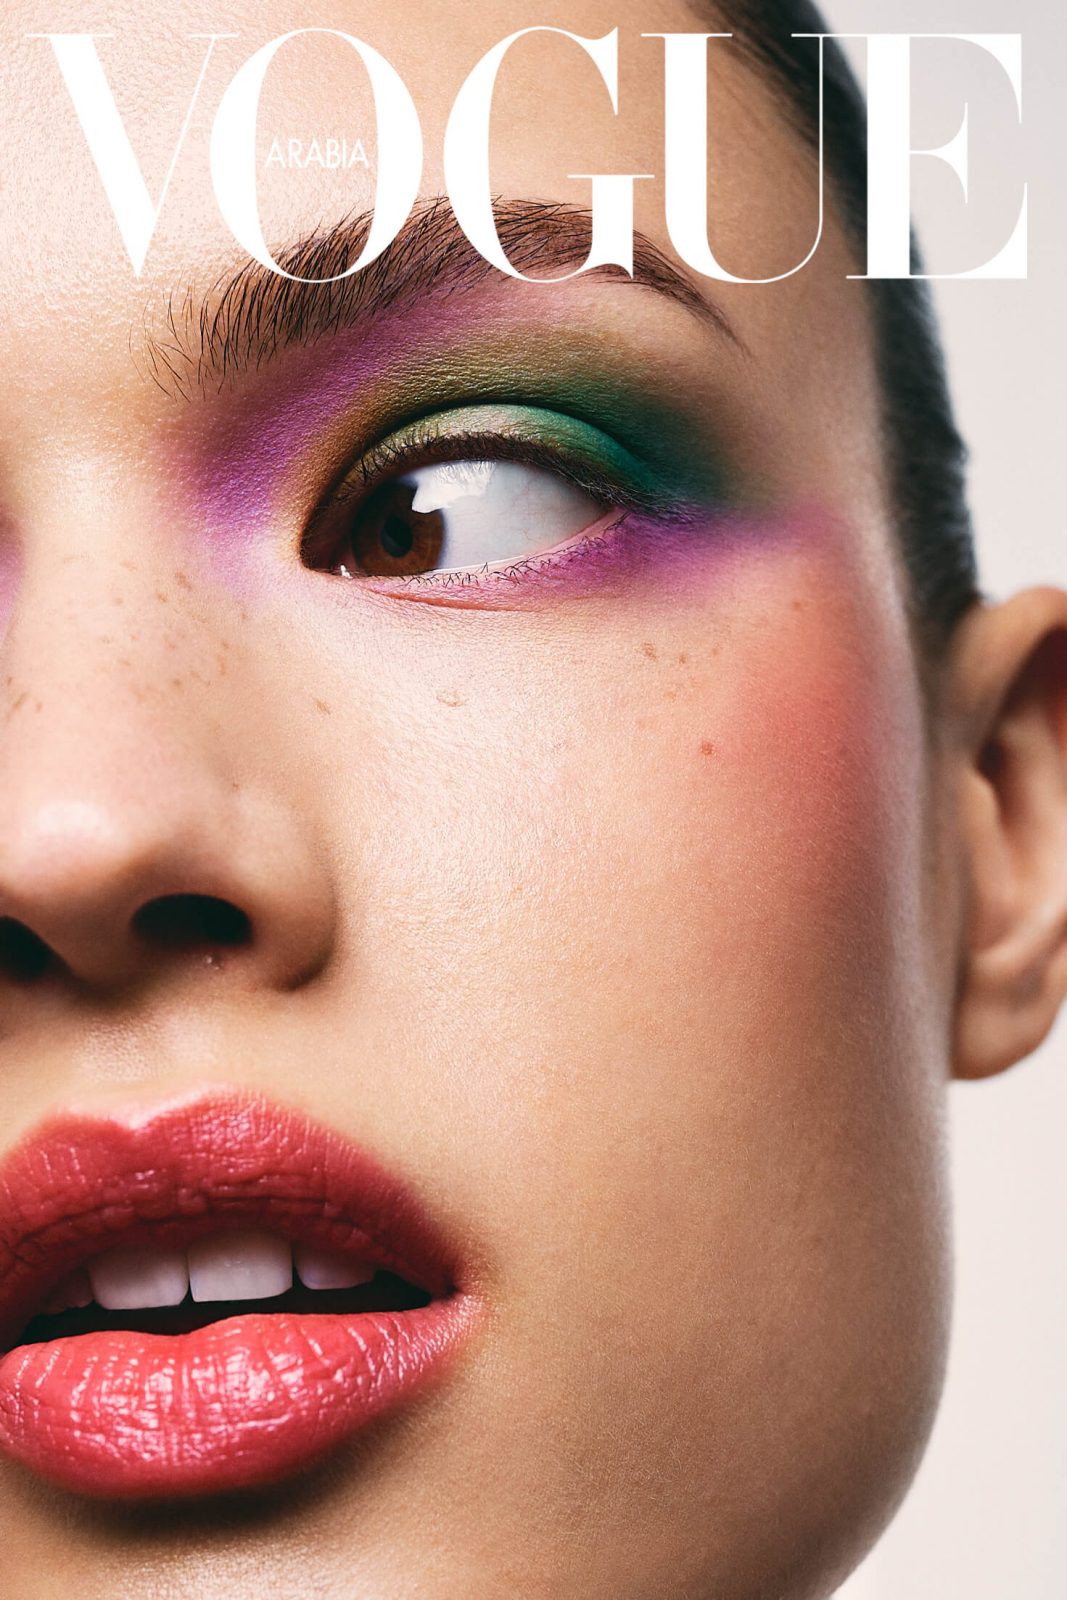 Vogue Arabia Christiane Baumgart Beauty Editorial